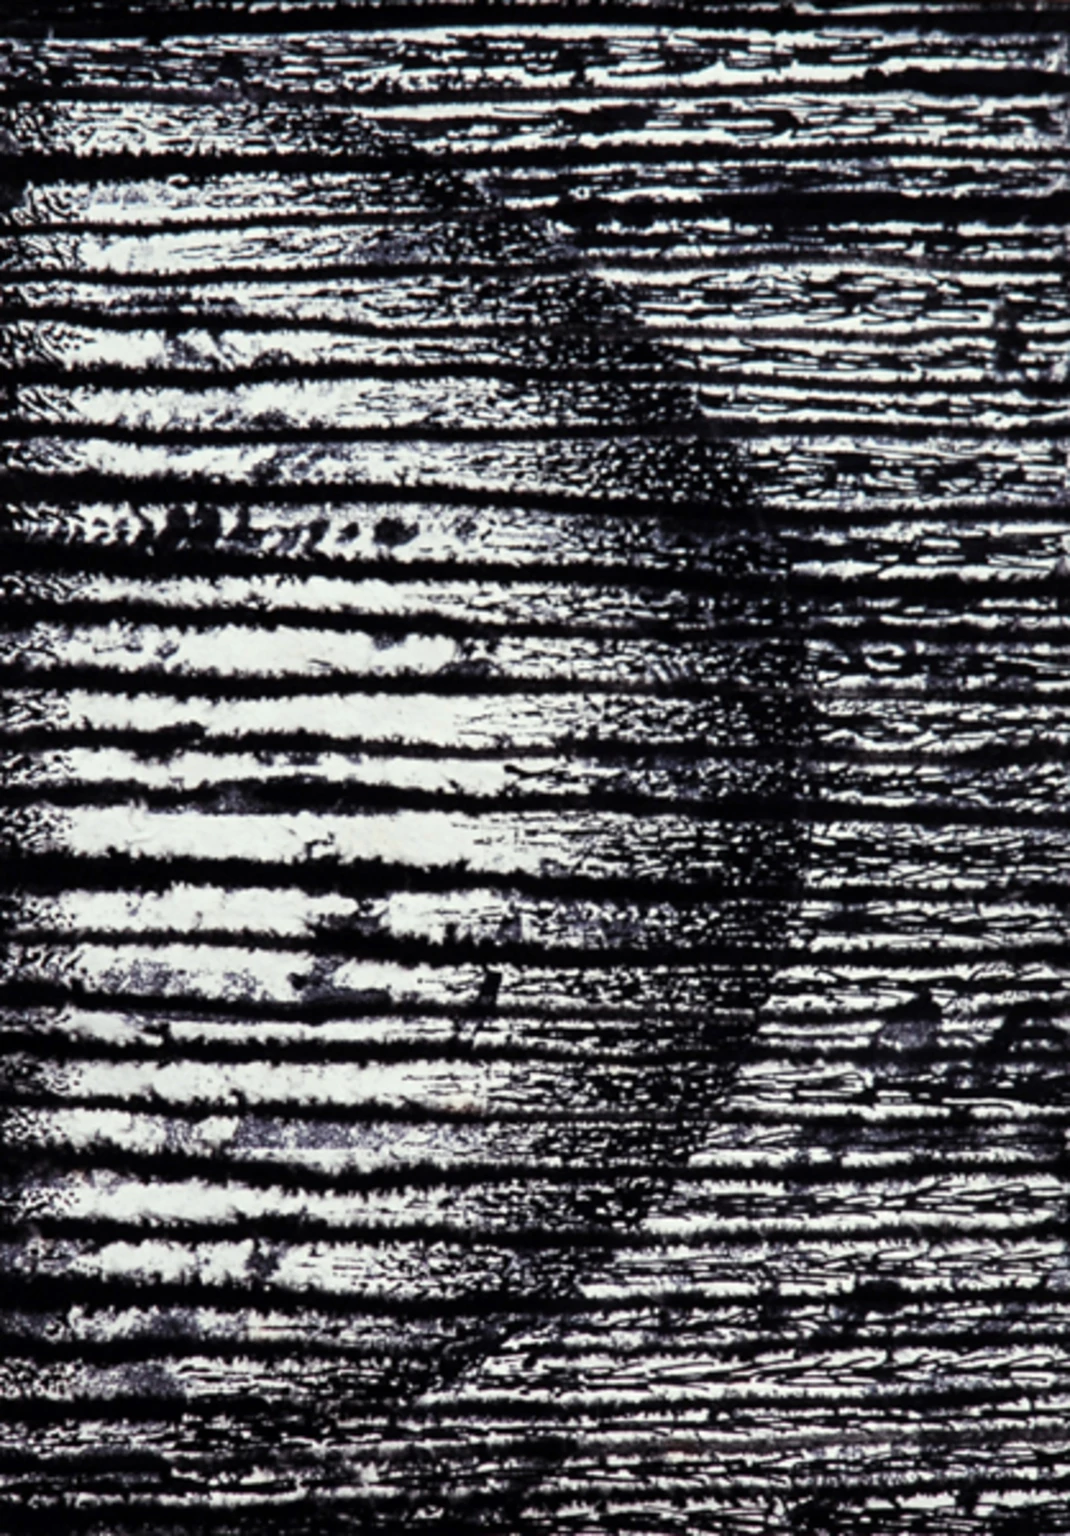 Telített tér, 1985 - papír, tus, 29 x 21 cm